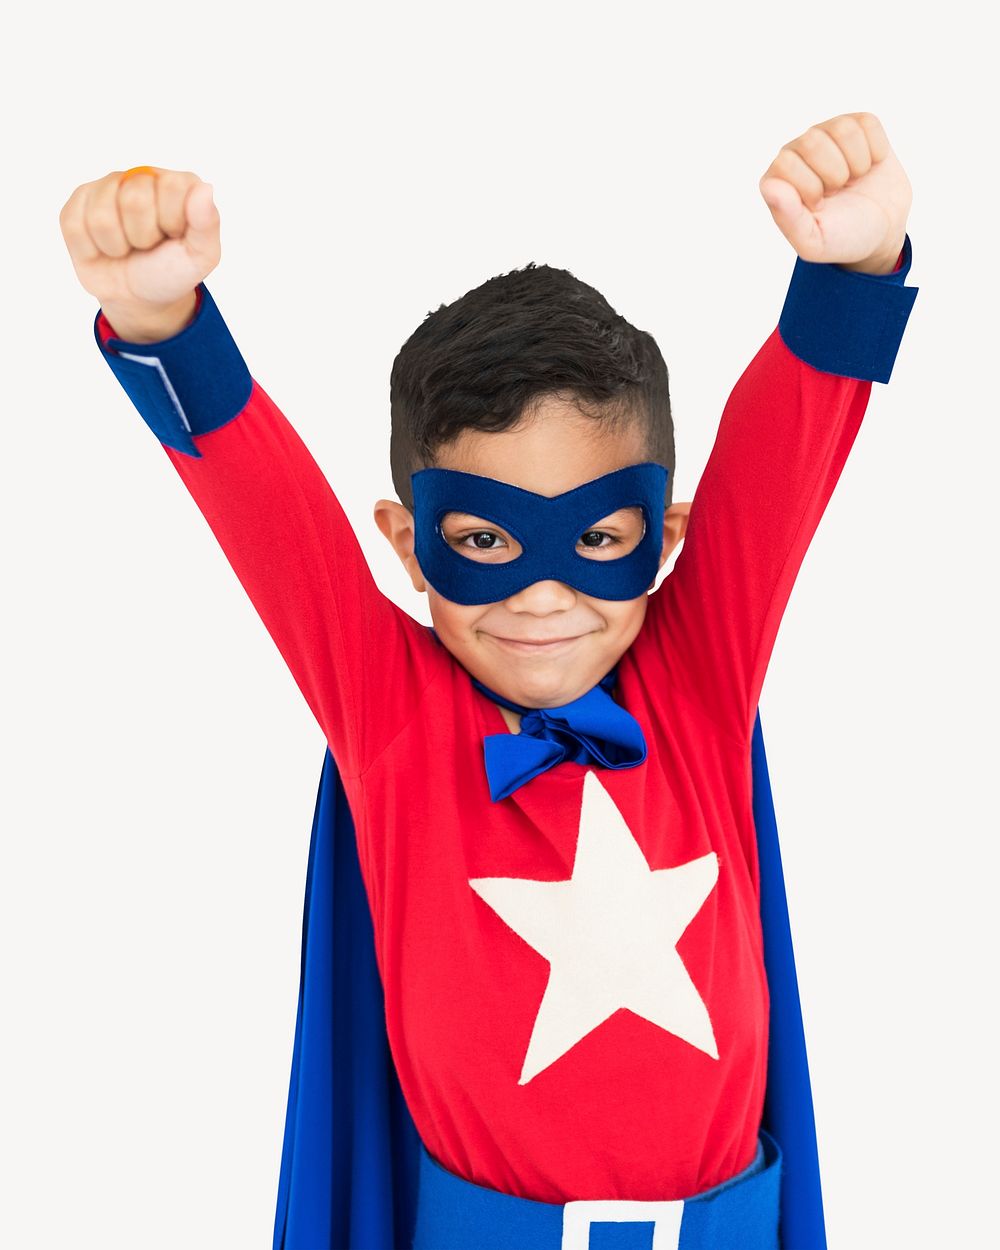 Superhero boy, kids education image psd